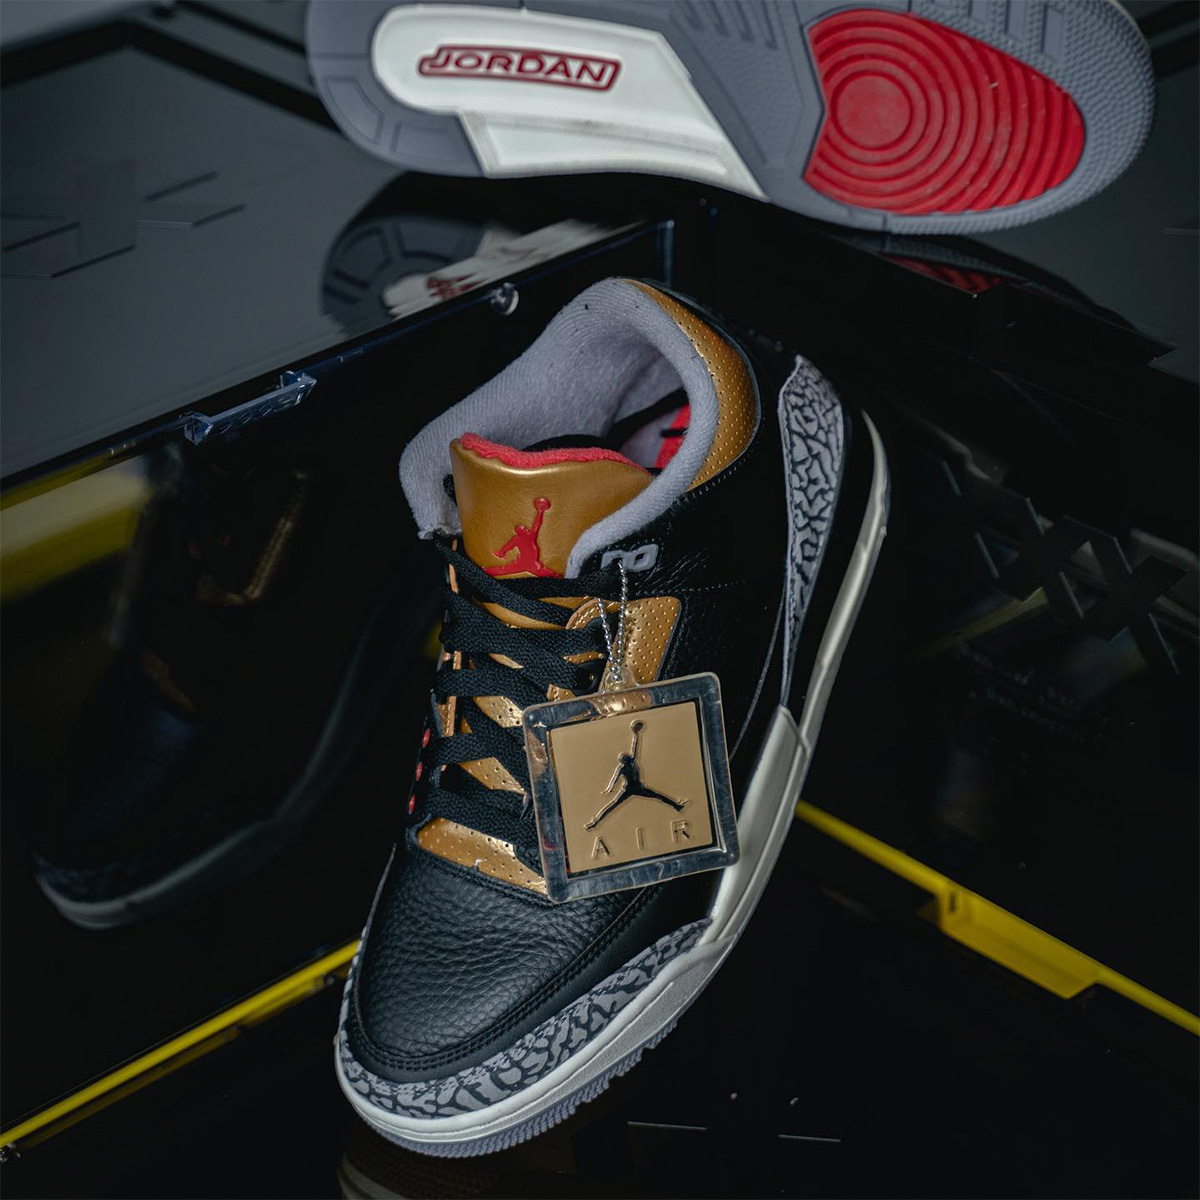 Air Jordan 3 Black Metallic Gold Cement Grey CK9246-067 Release Date